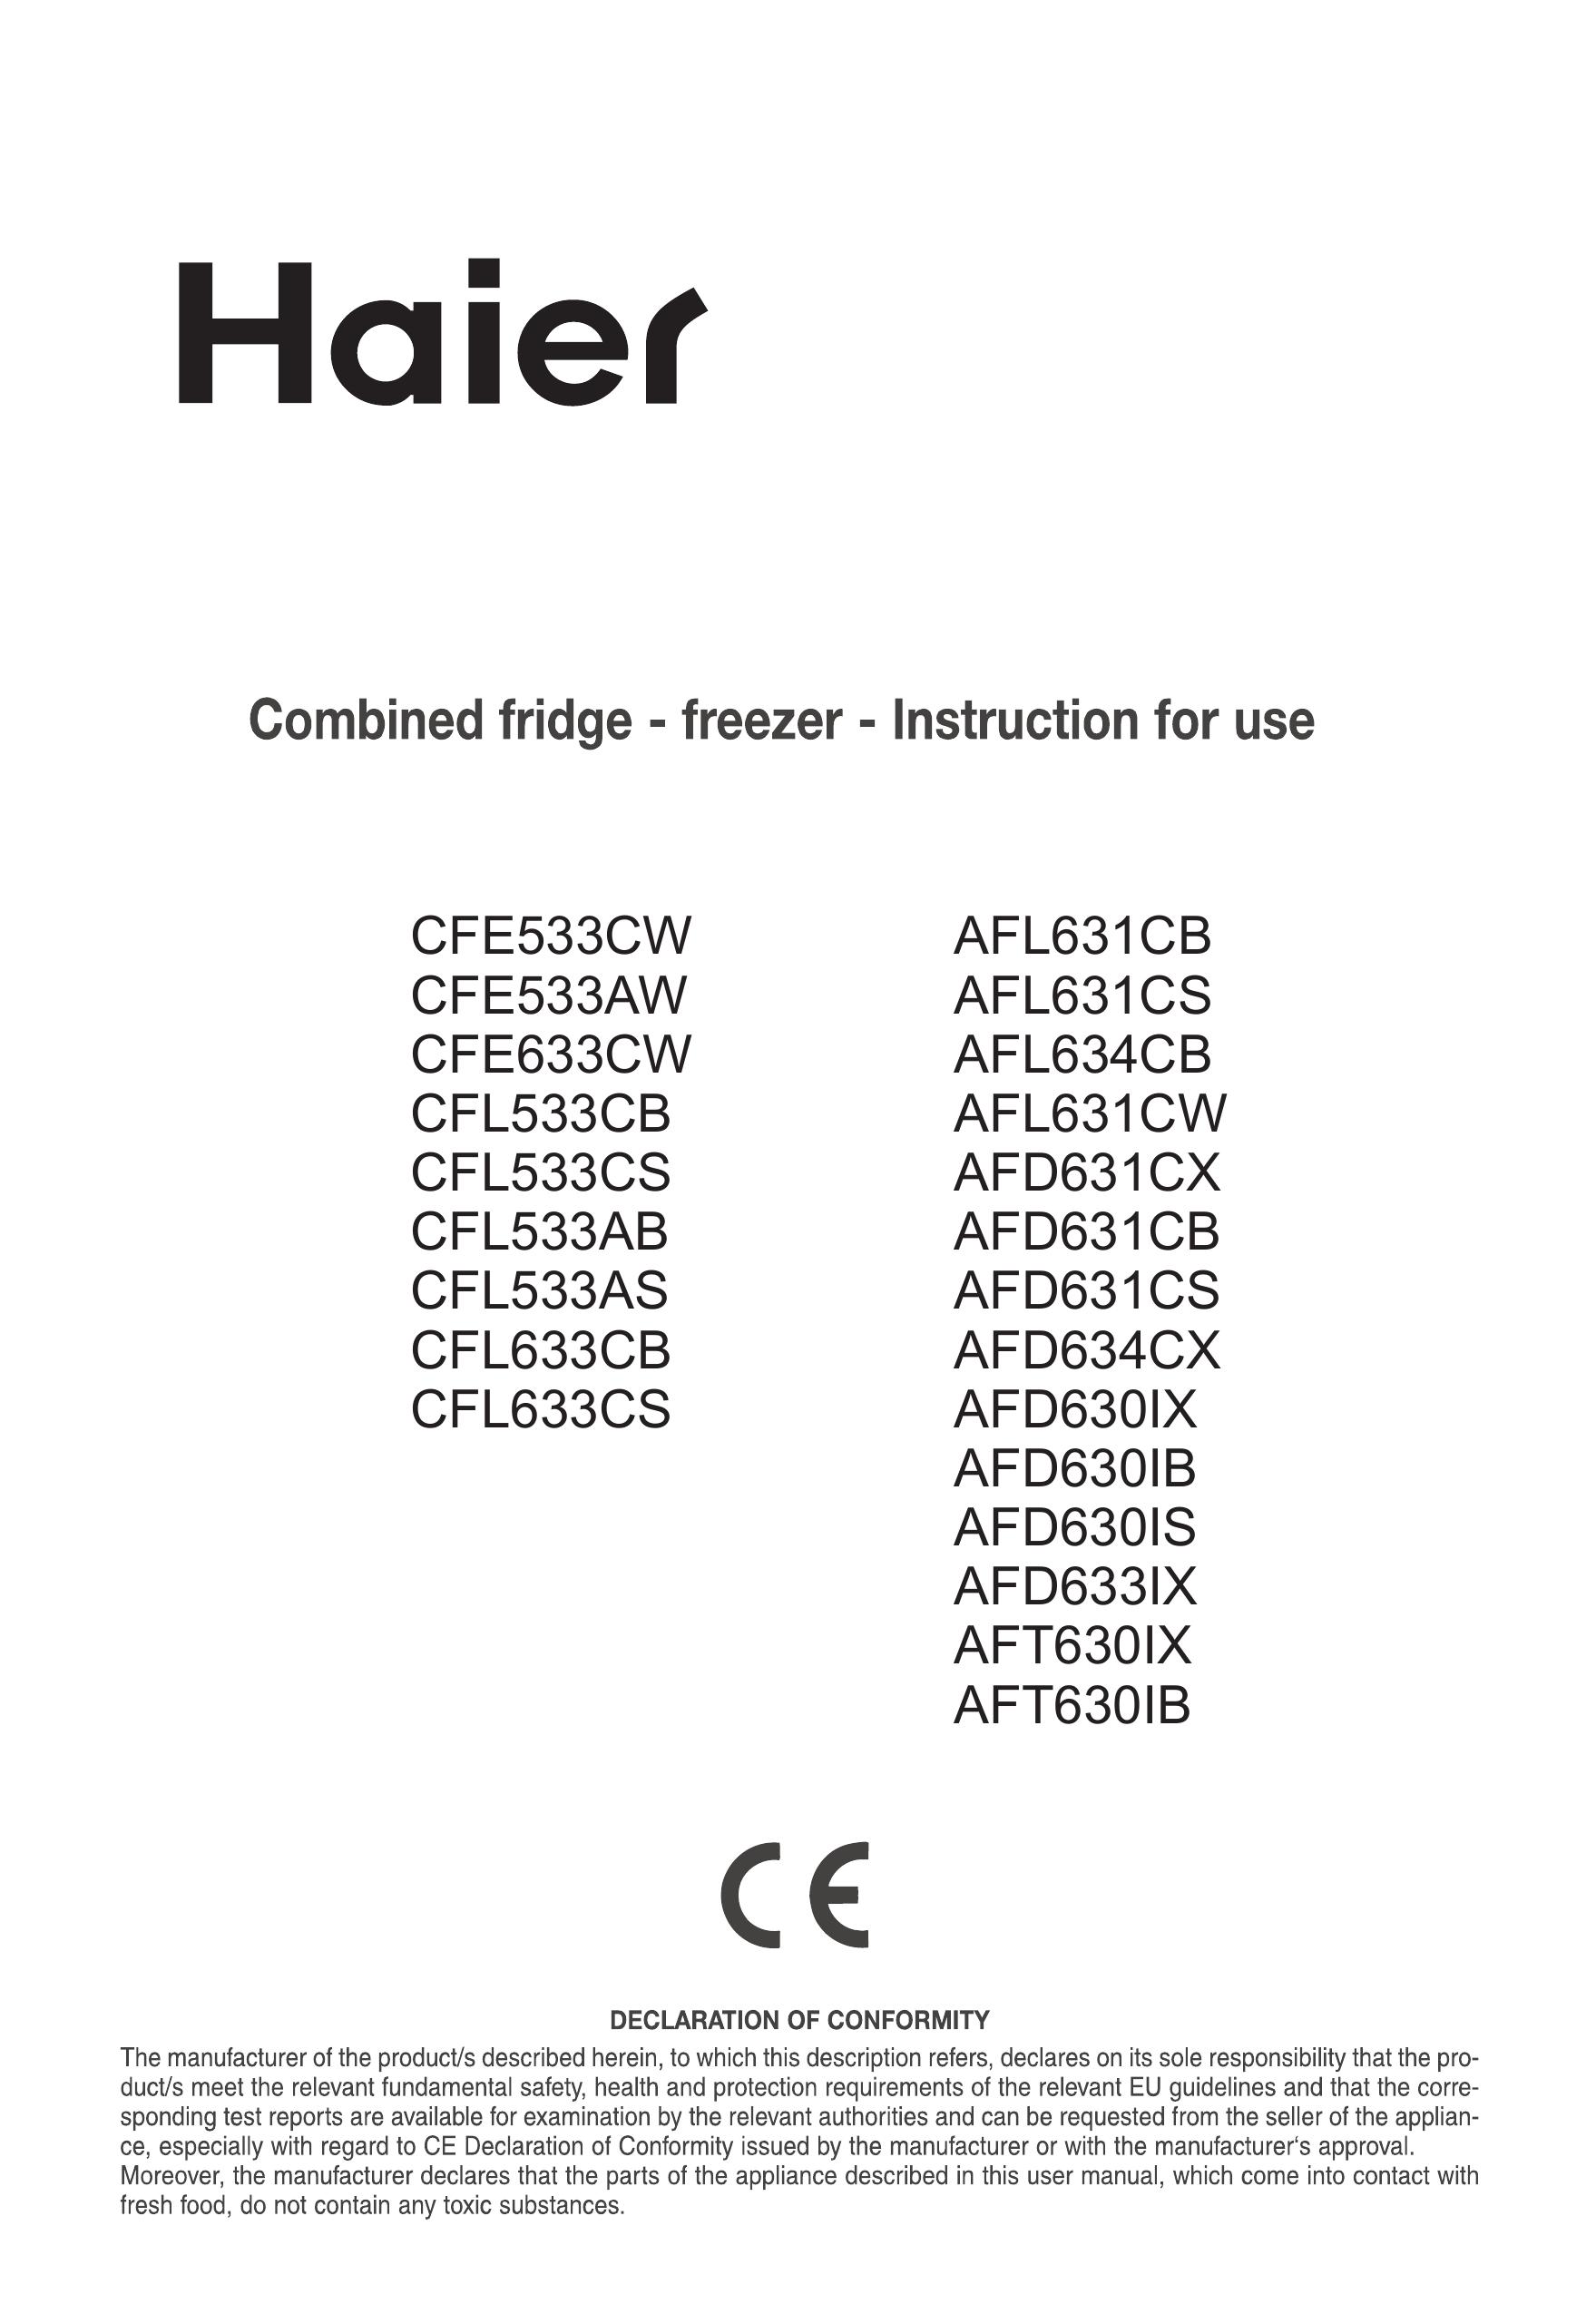 Haier AFD633IX Refrigerator User Manual